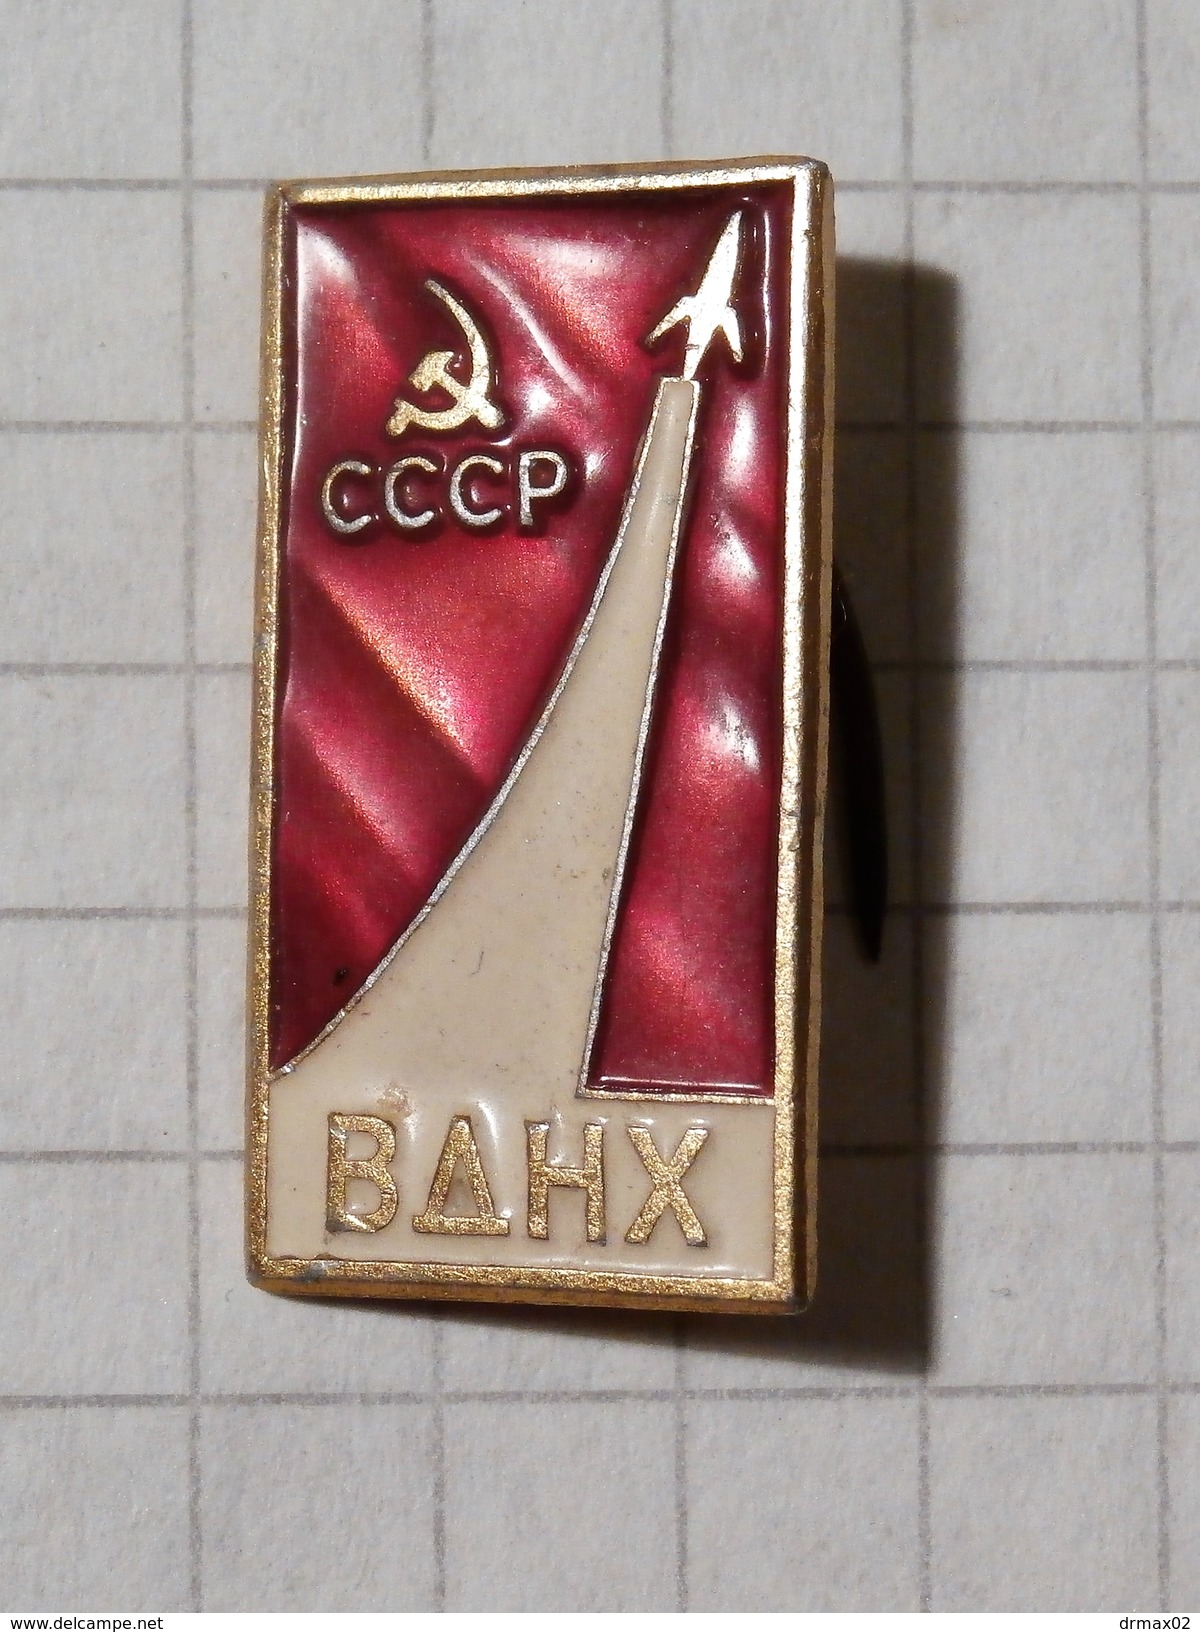 ROCKET VDNH SOVIET RUSSIAN SPACE / USSR - Raumfahrt